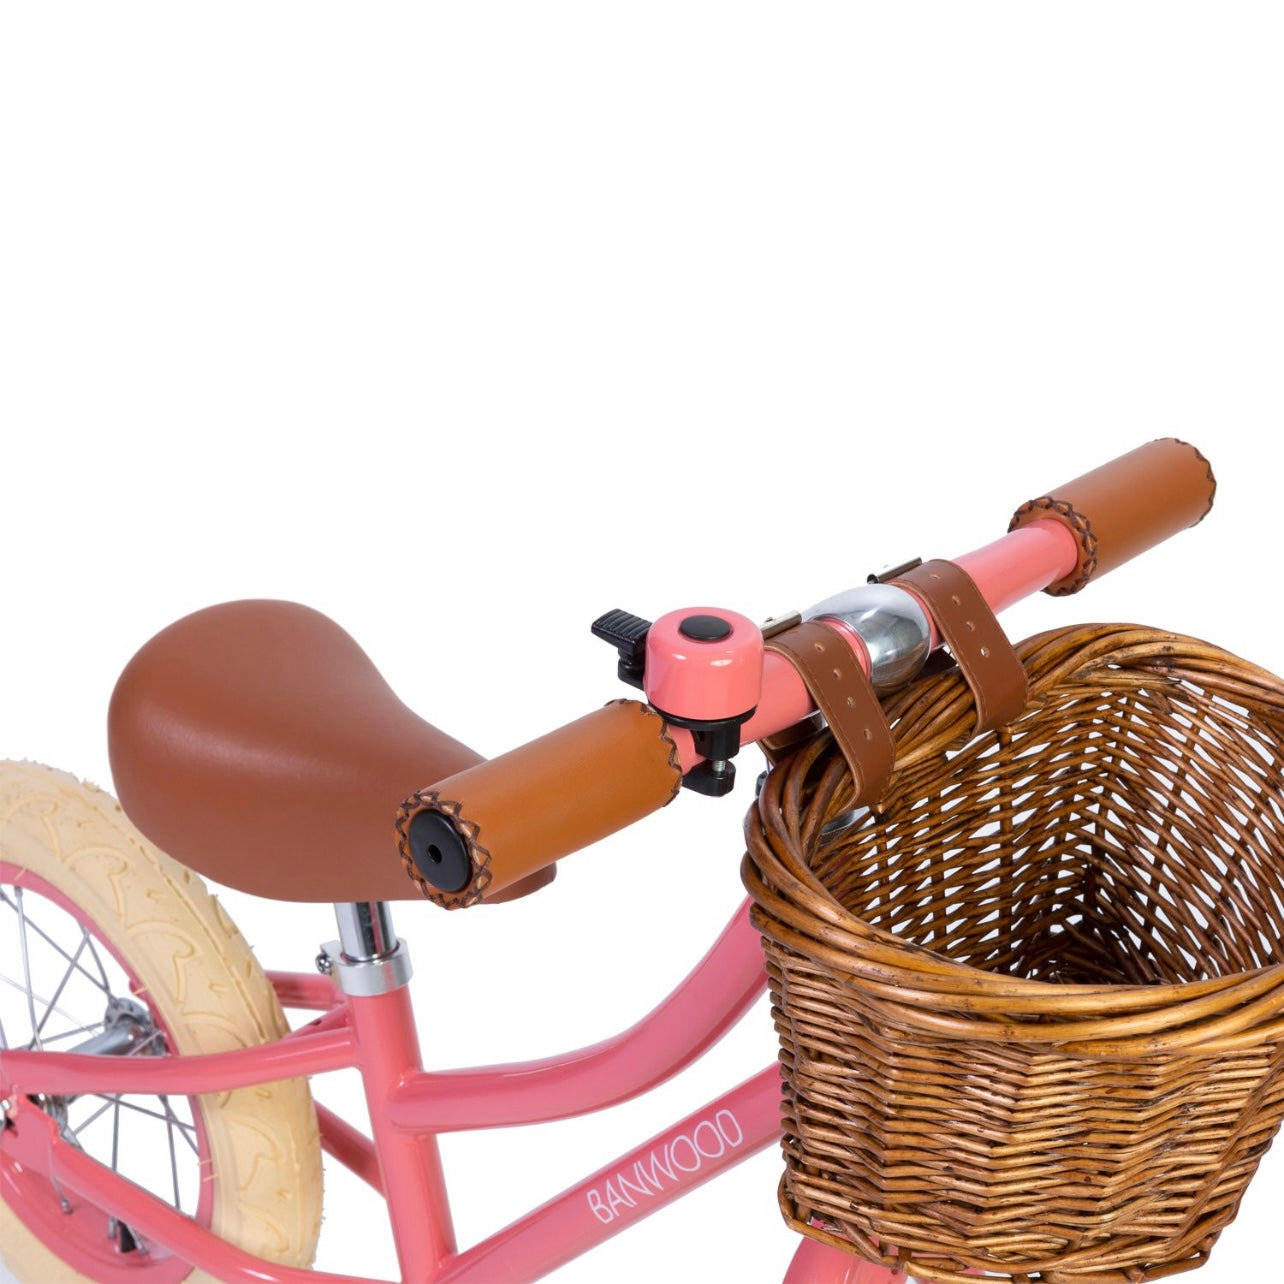 Coral Balance Bike with Basket